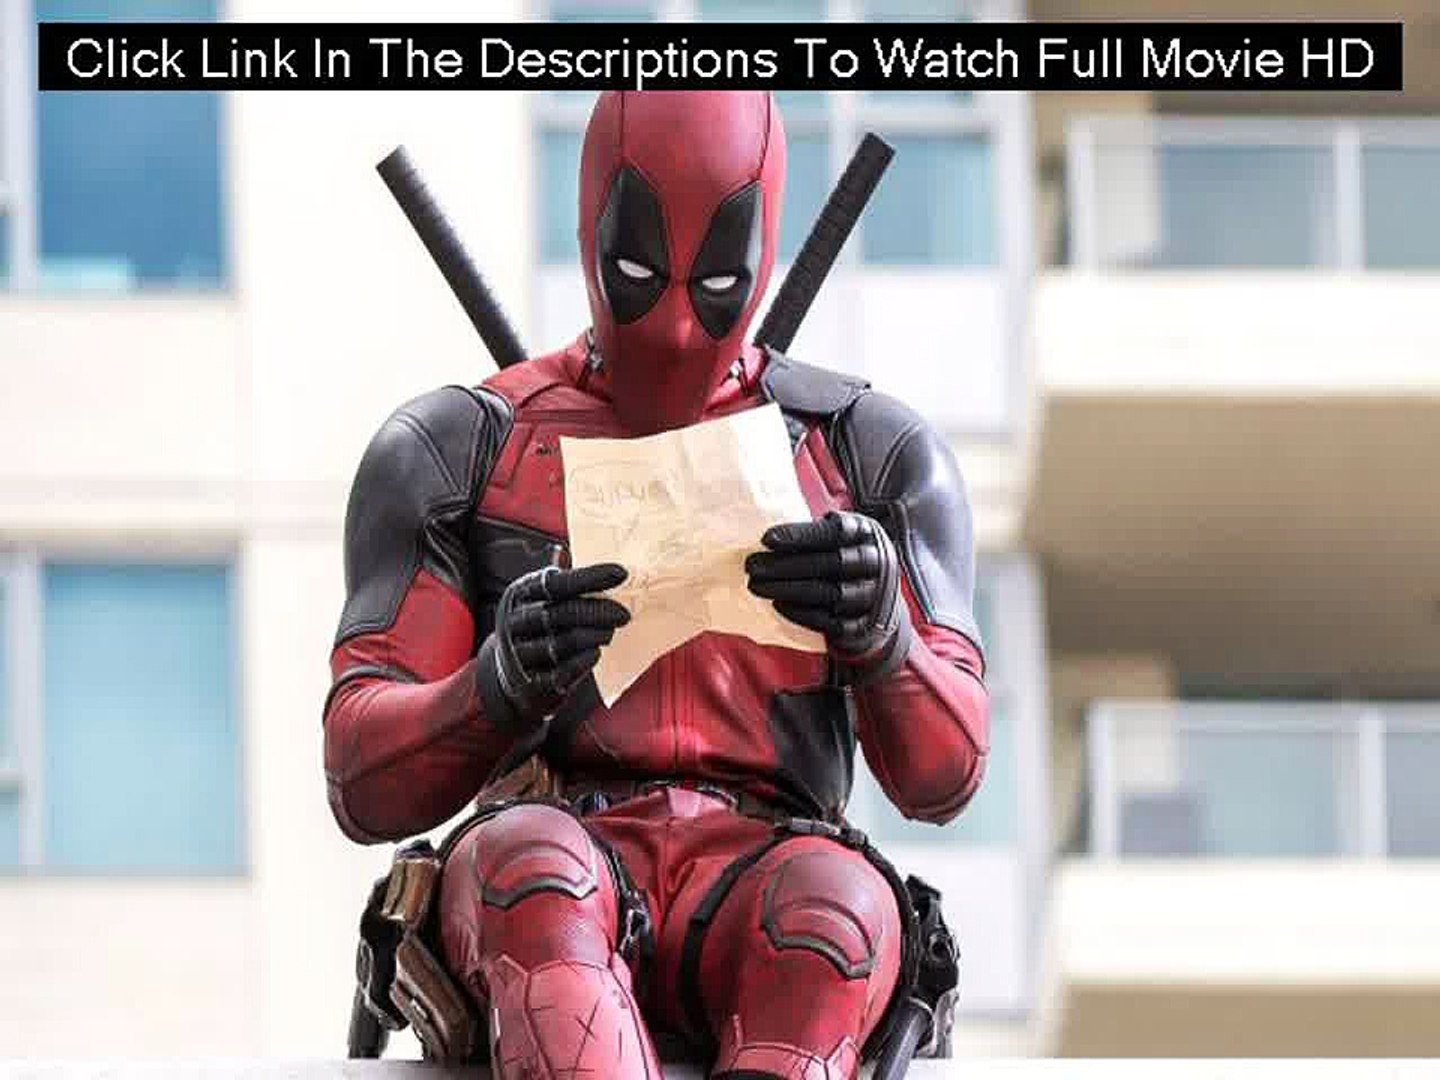 Watch Finding Dory 4K Ultra HD Full Movie